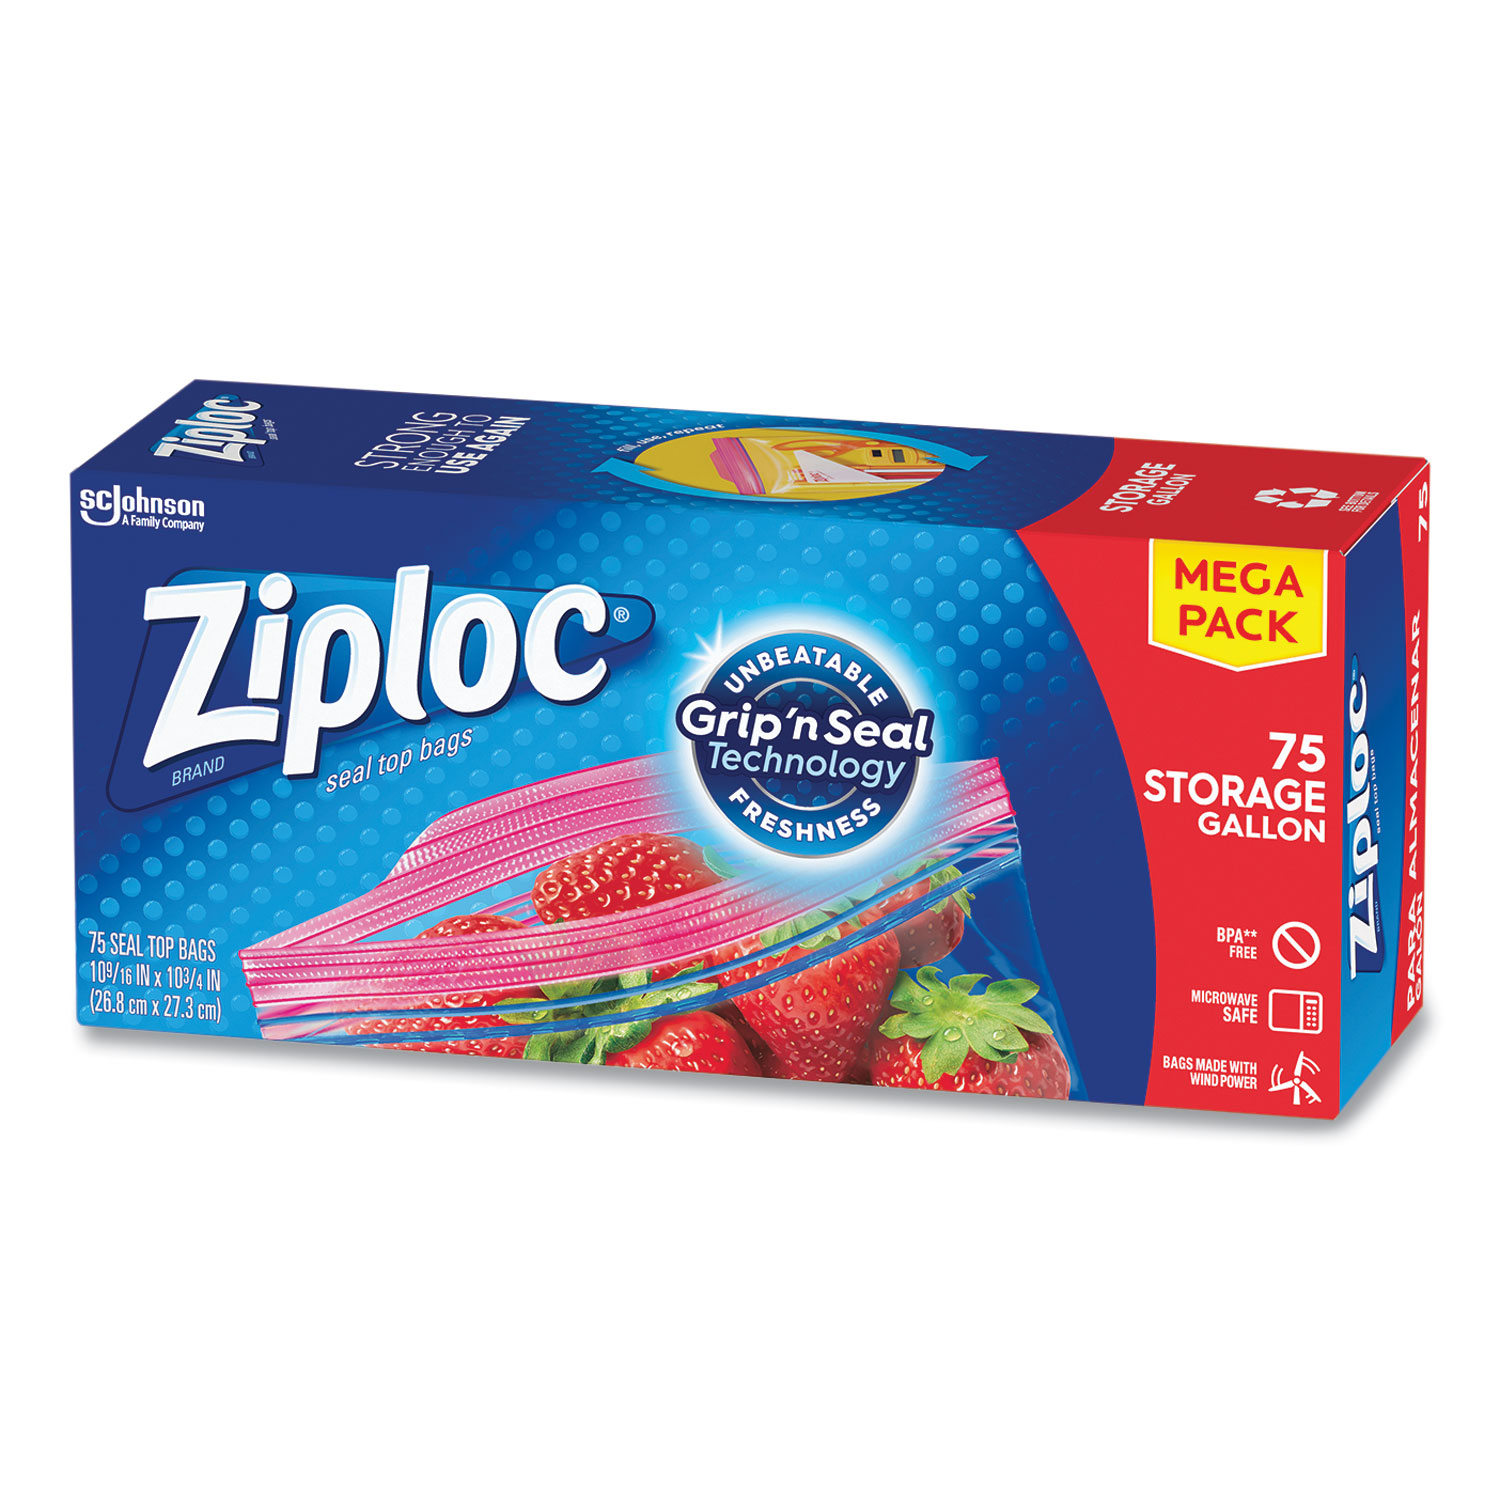 Ziploc Clear Reclosable Bag,1 gal. (Pack of 28)